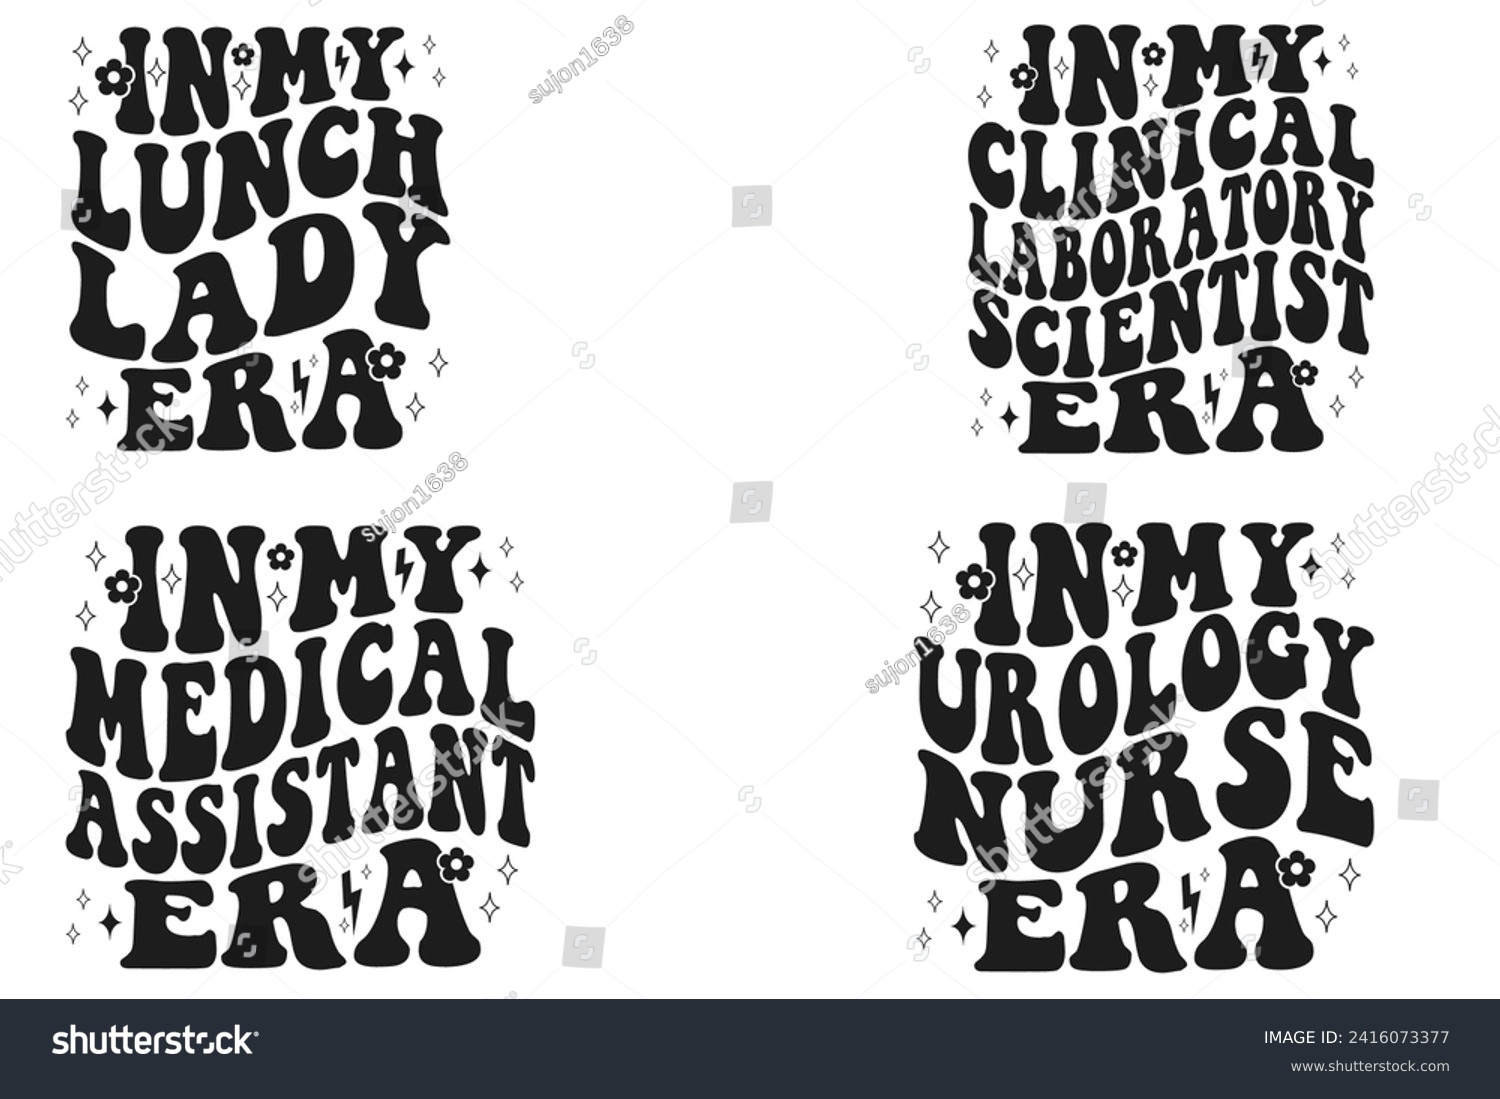 SVG of In My Lunch Lady Era, In My Medical Assistant Era, In My Clinical Laboratory Scientist Era, In My Urology Nurse Era retro T-shirt svg